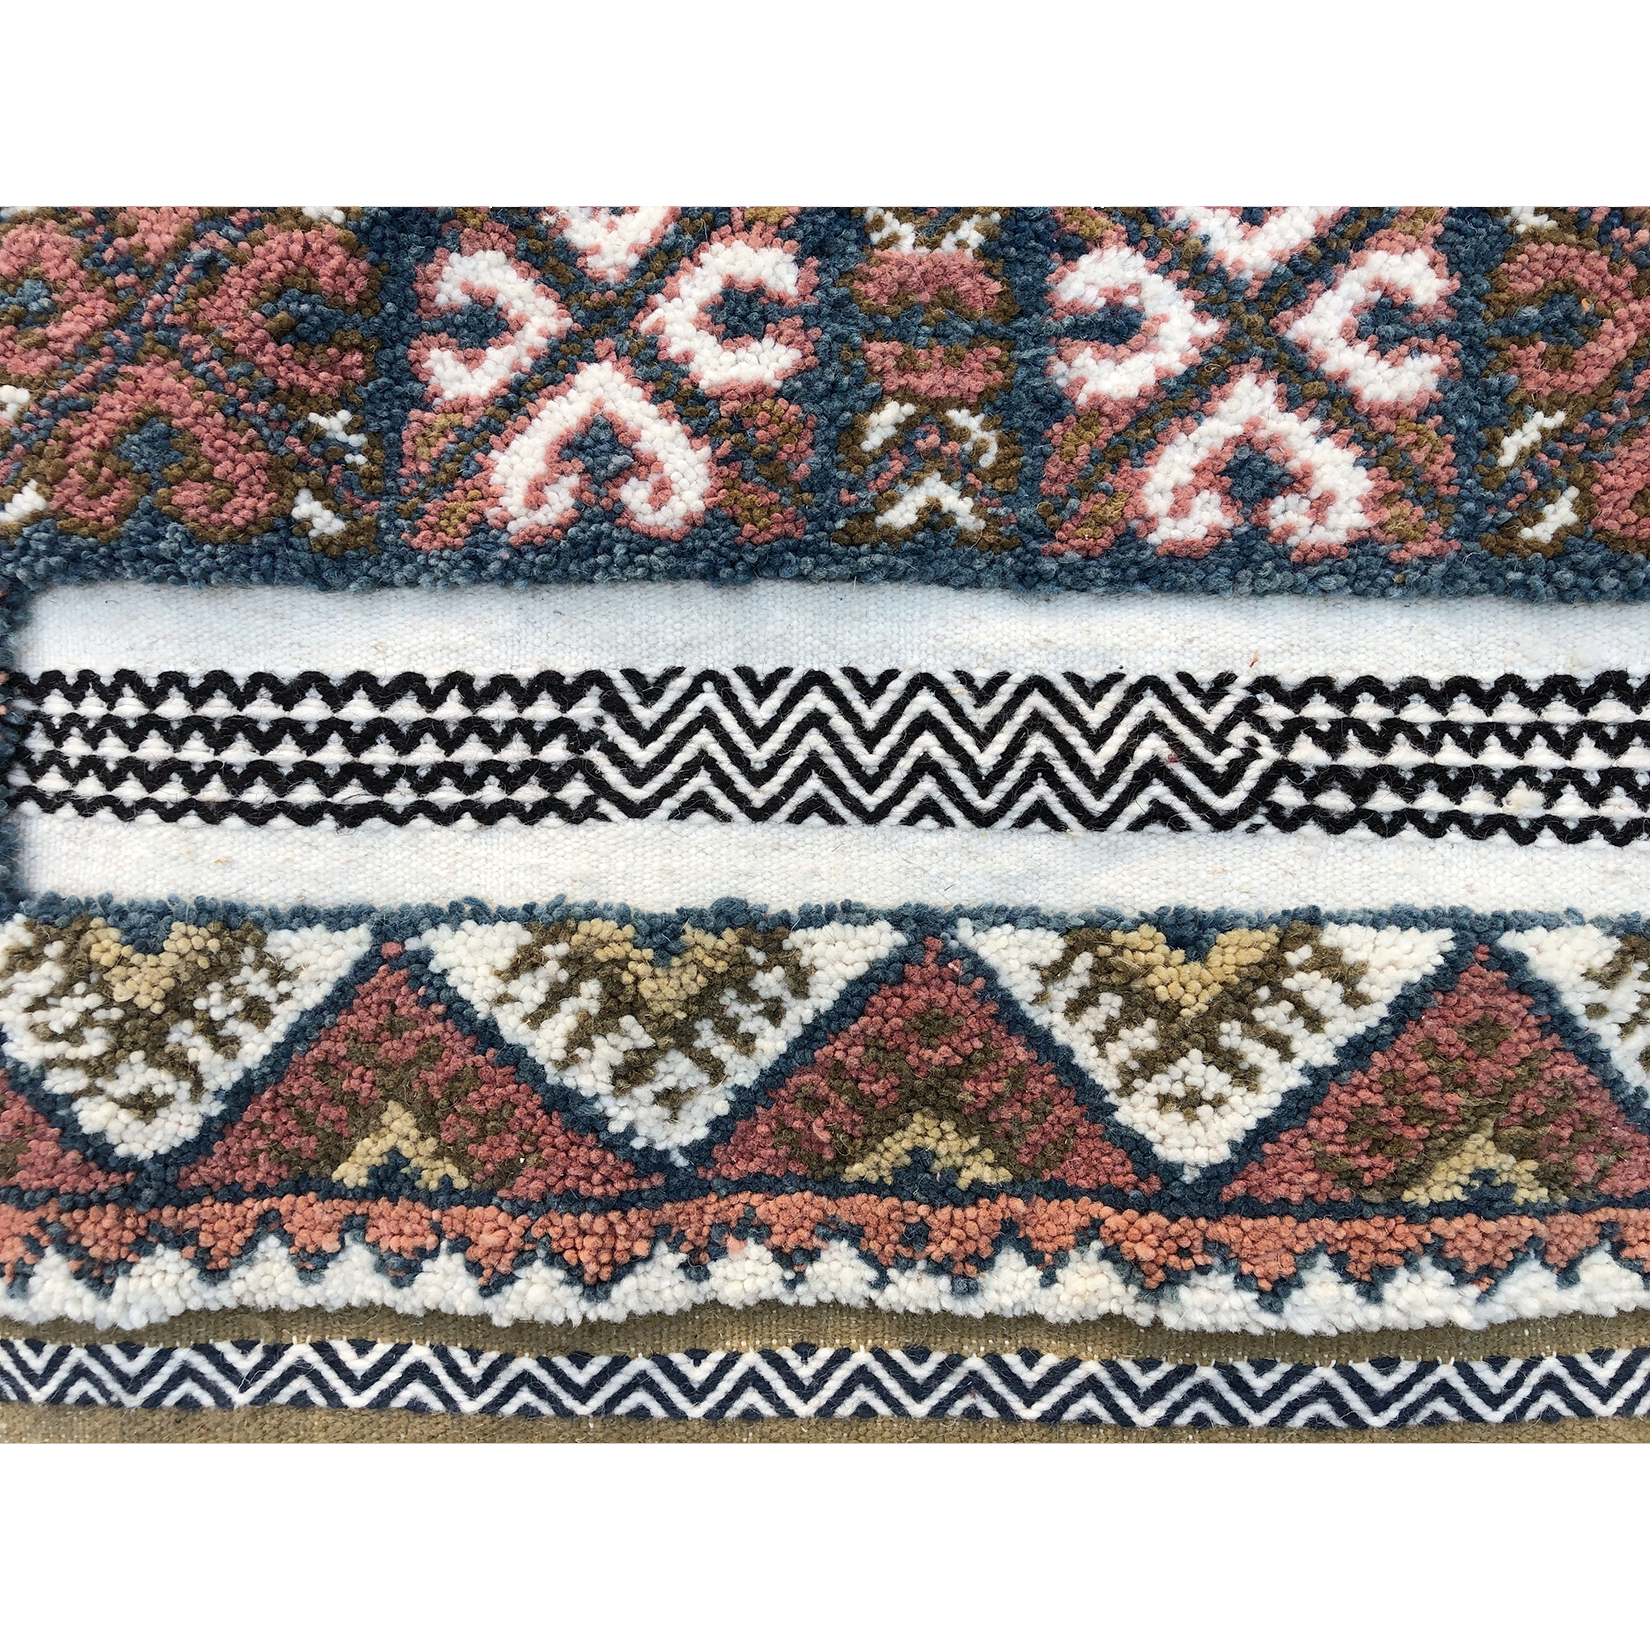 Modern interior boho chic berber rug - Kantara | Moroccan Rugs